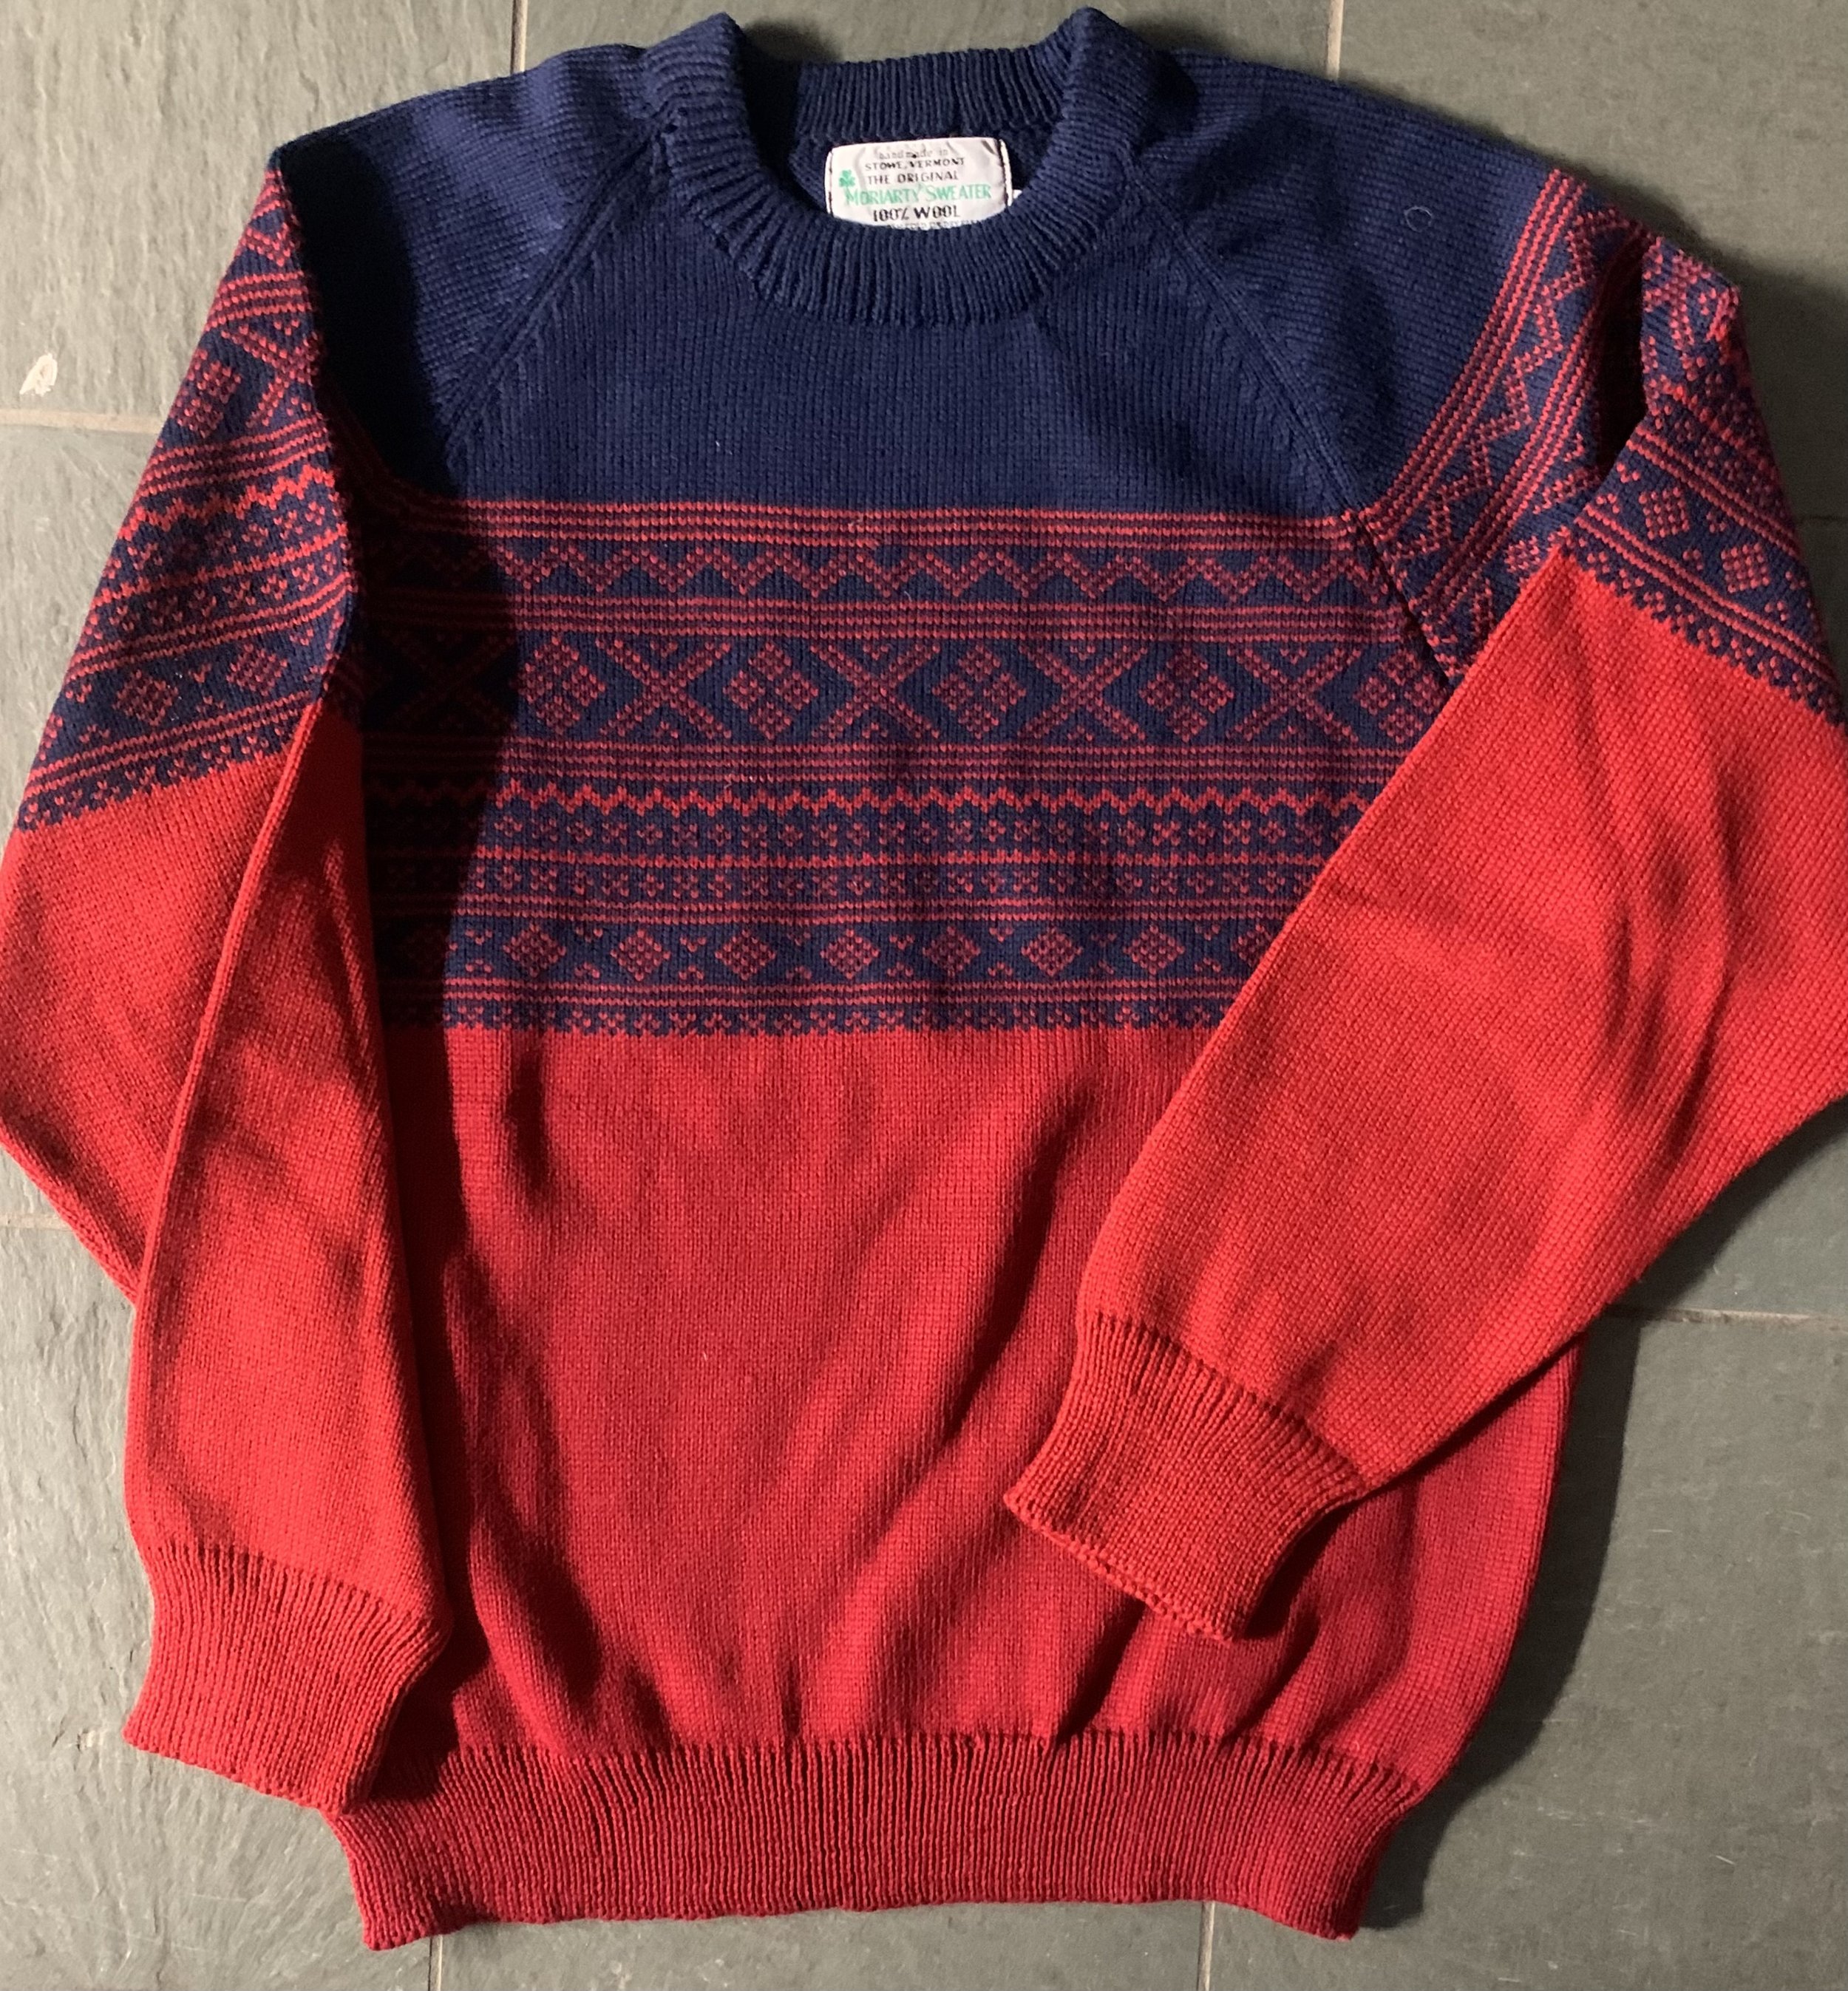 Moriarty Sweater.jpg